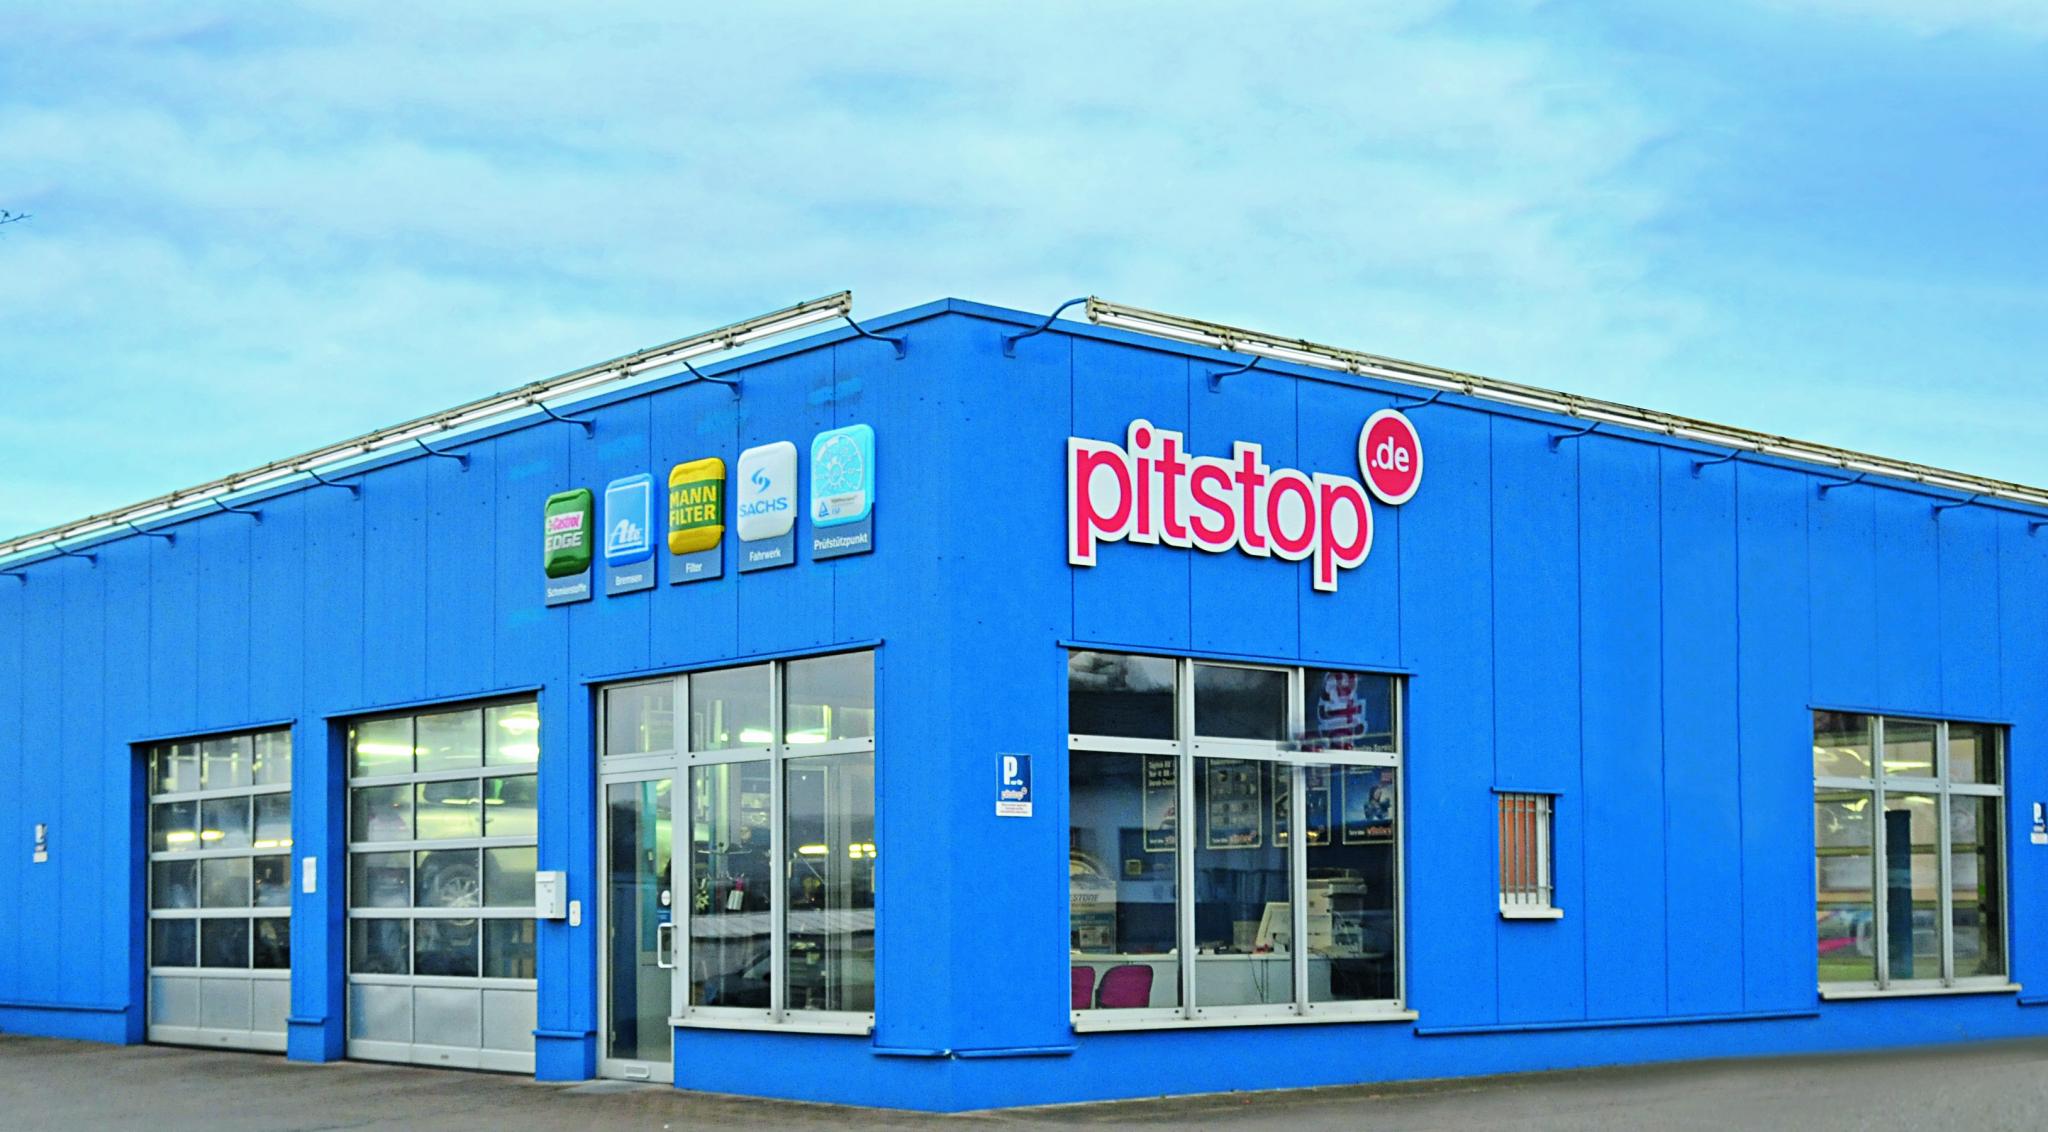 HUK-Coburg buys 25% of tyre retailer Pitstop